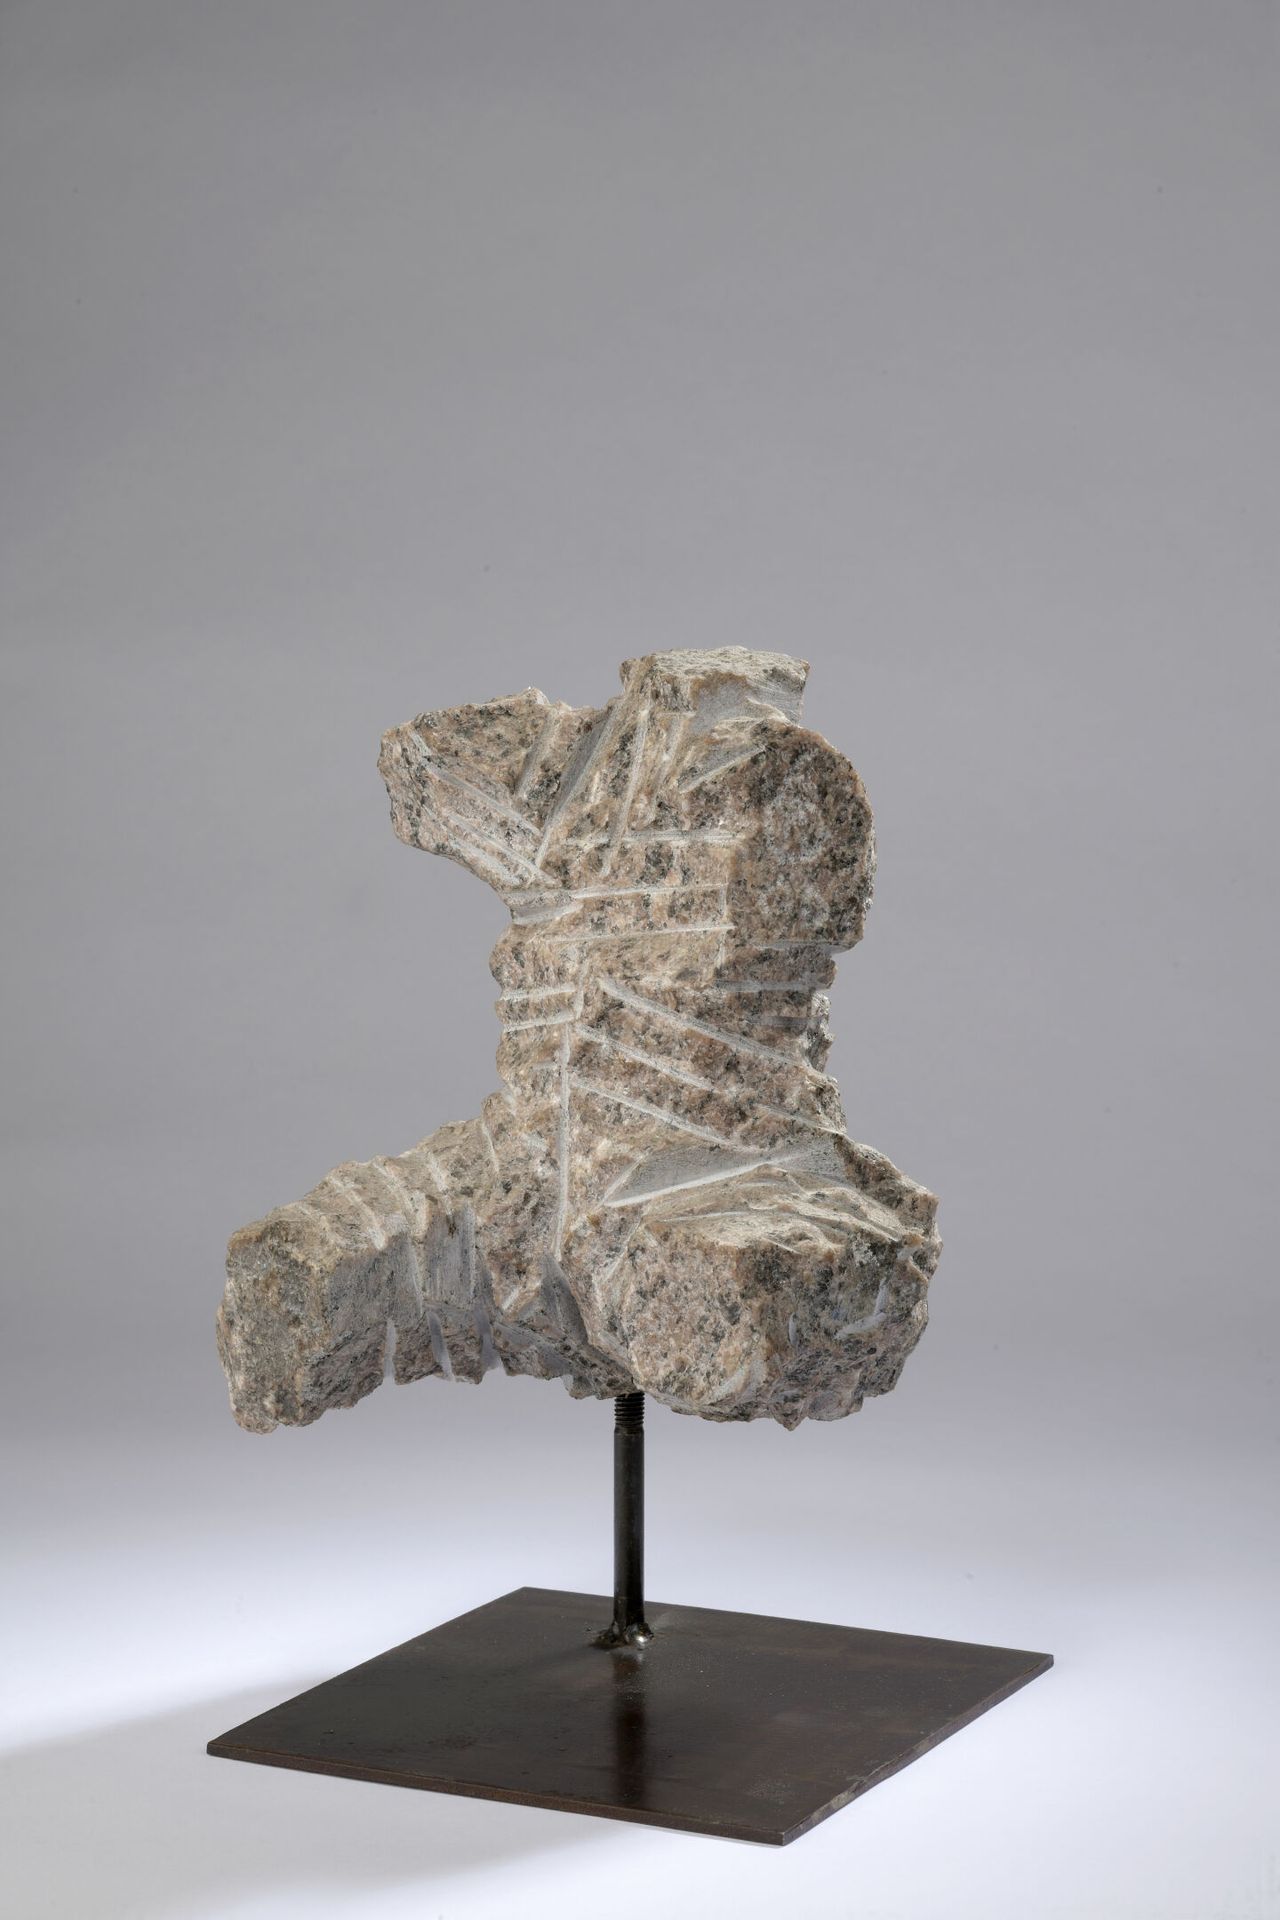 Null Denis MONFLEUR (geboren 1962)

Torso, 2000

Granitskulptur (Direktschnitt),&hellip;